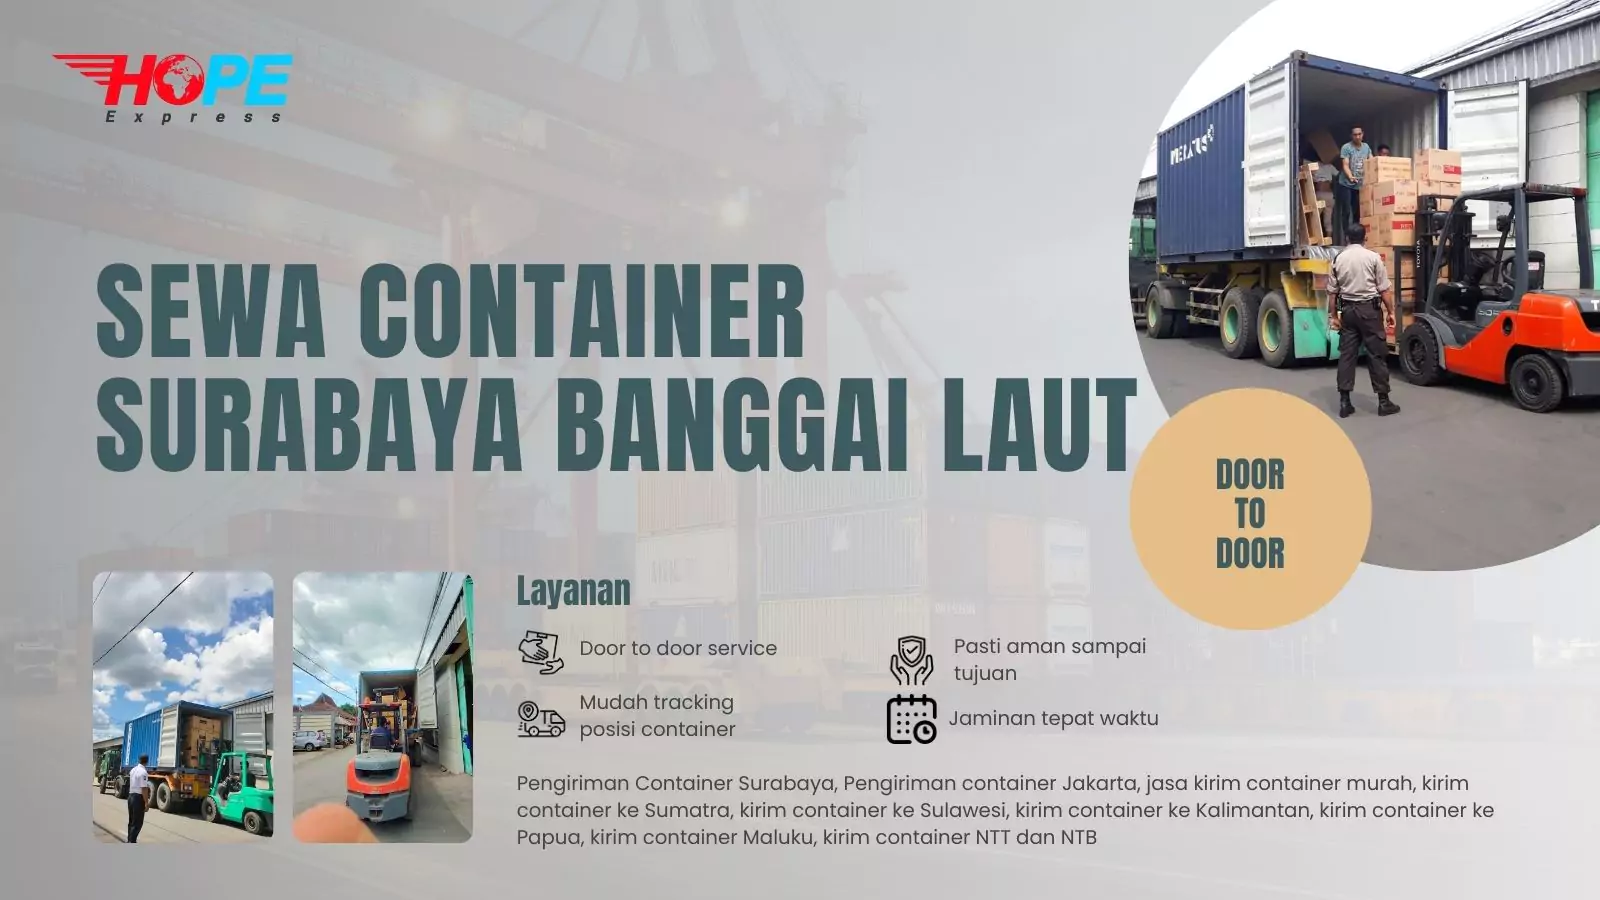 Sewa Container Surabaya Banggai Laut